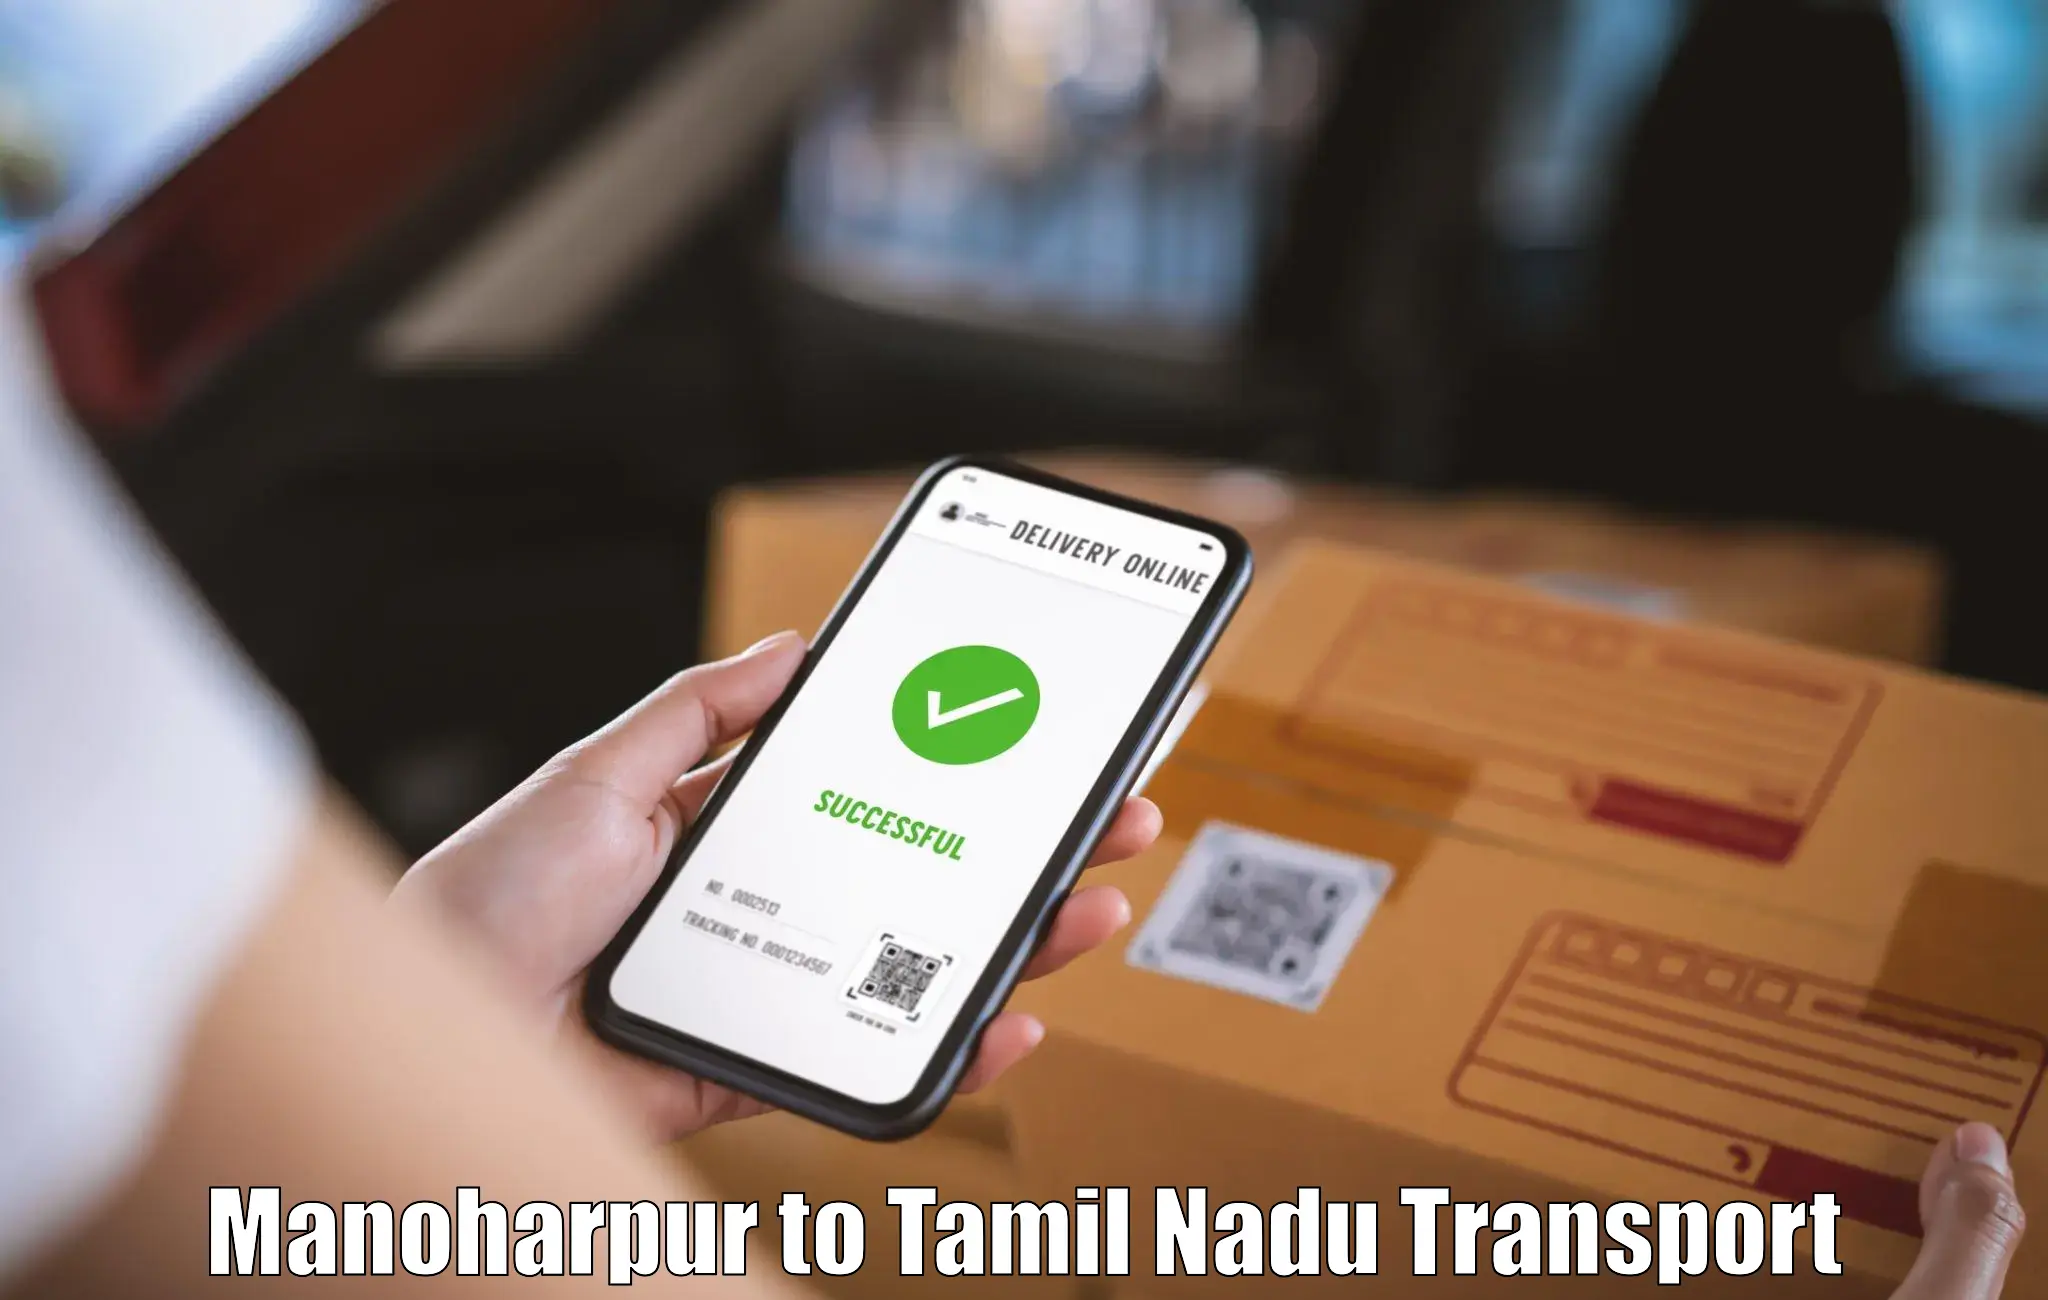 Pick up transport service Manoharpur to Perambur